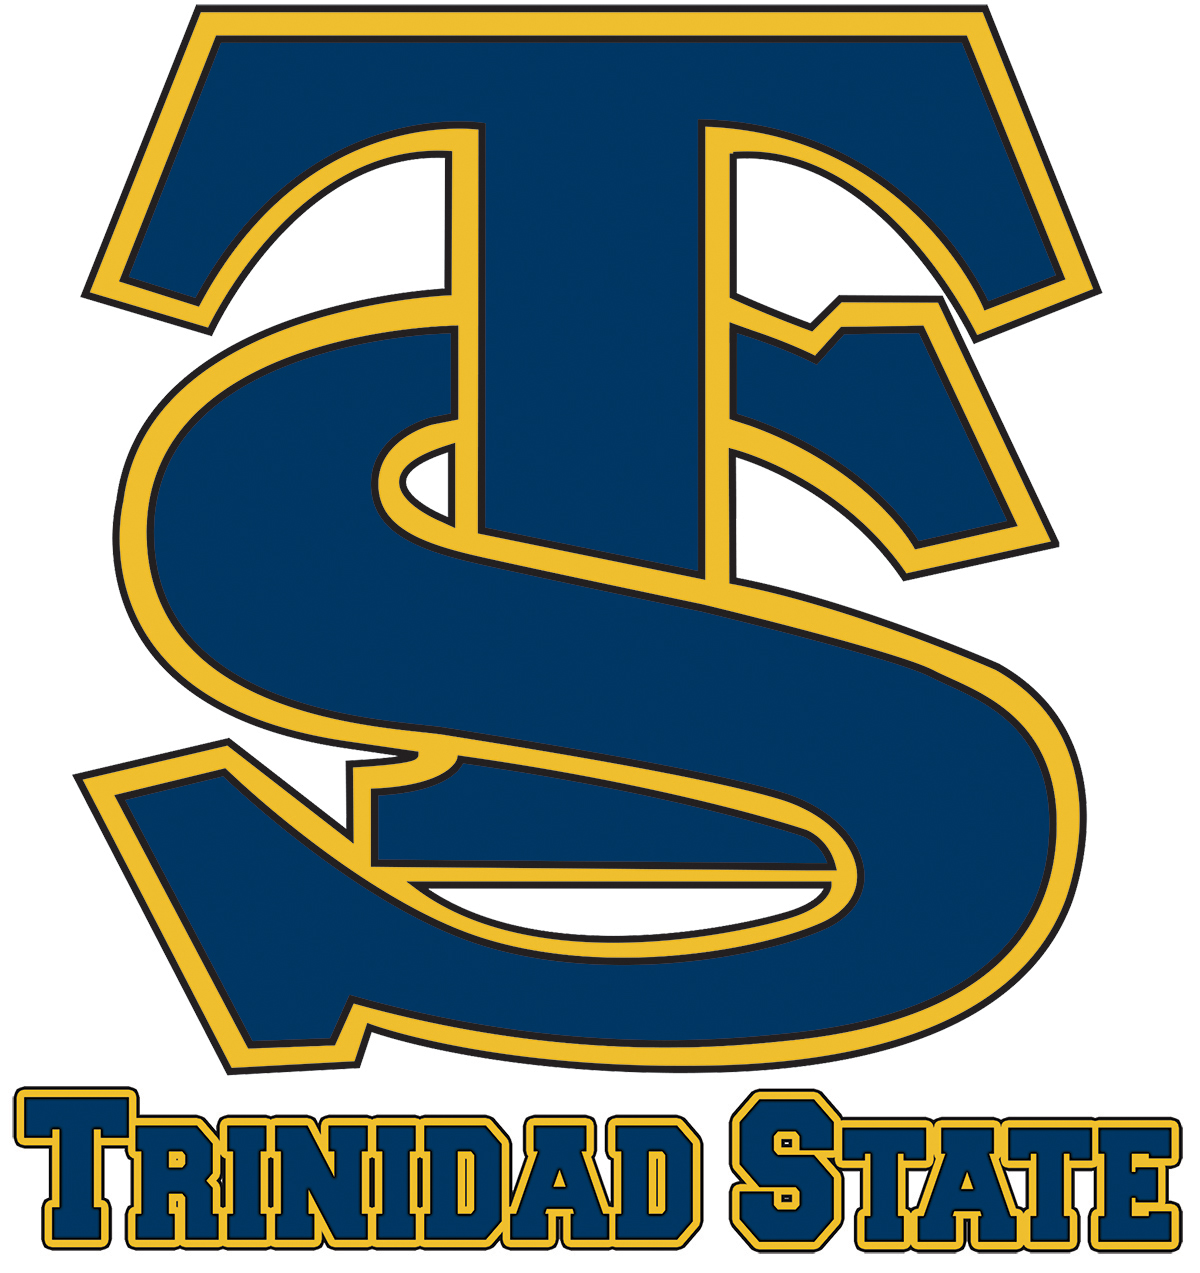 Trinidad State logo image